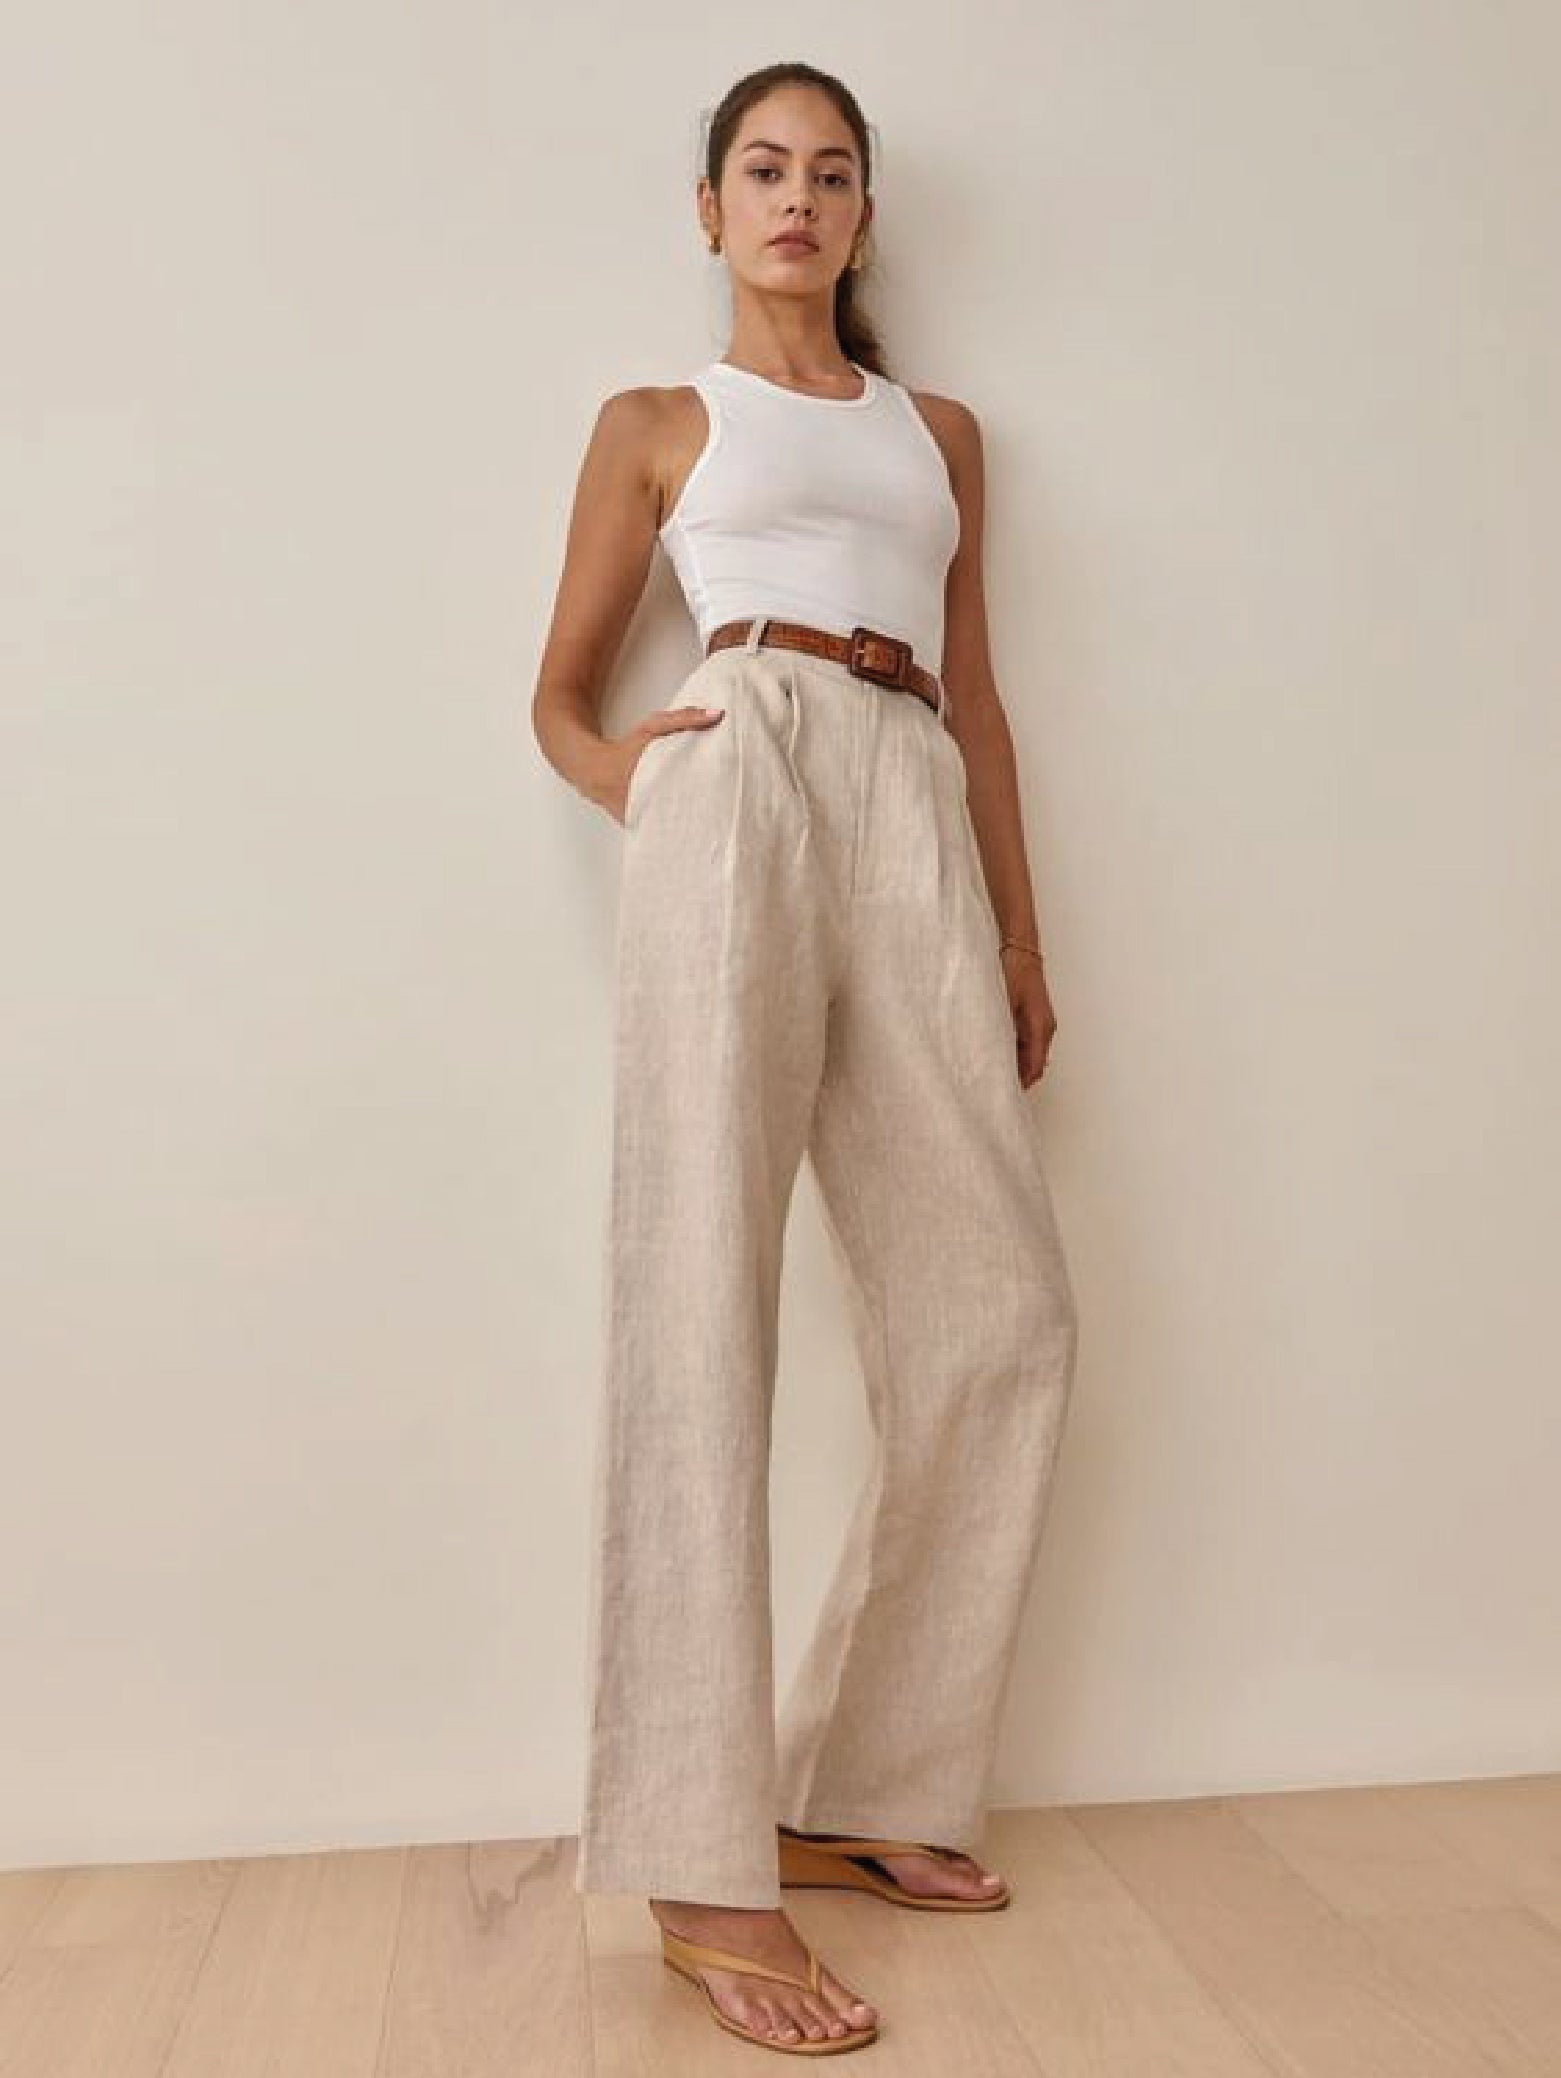 Outfit con pantalones de lino